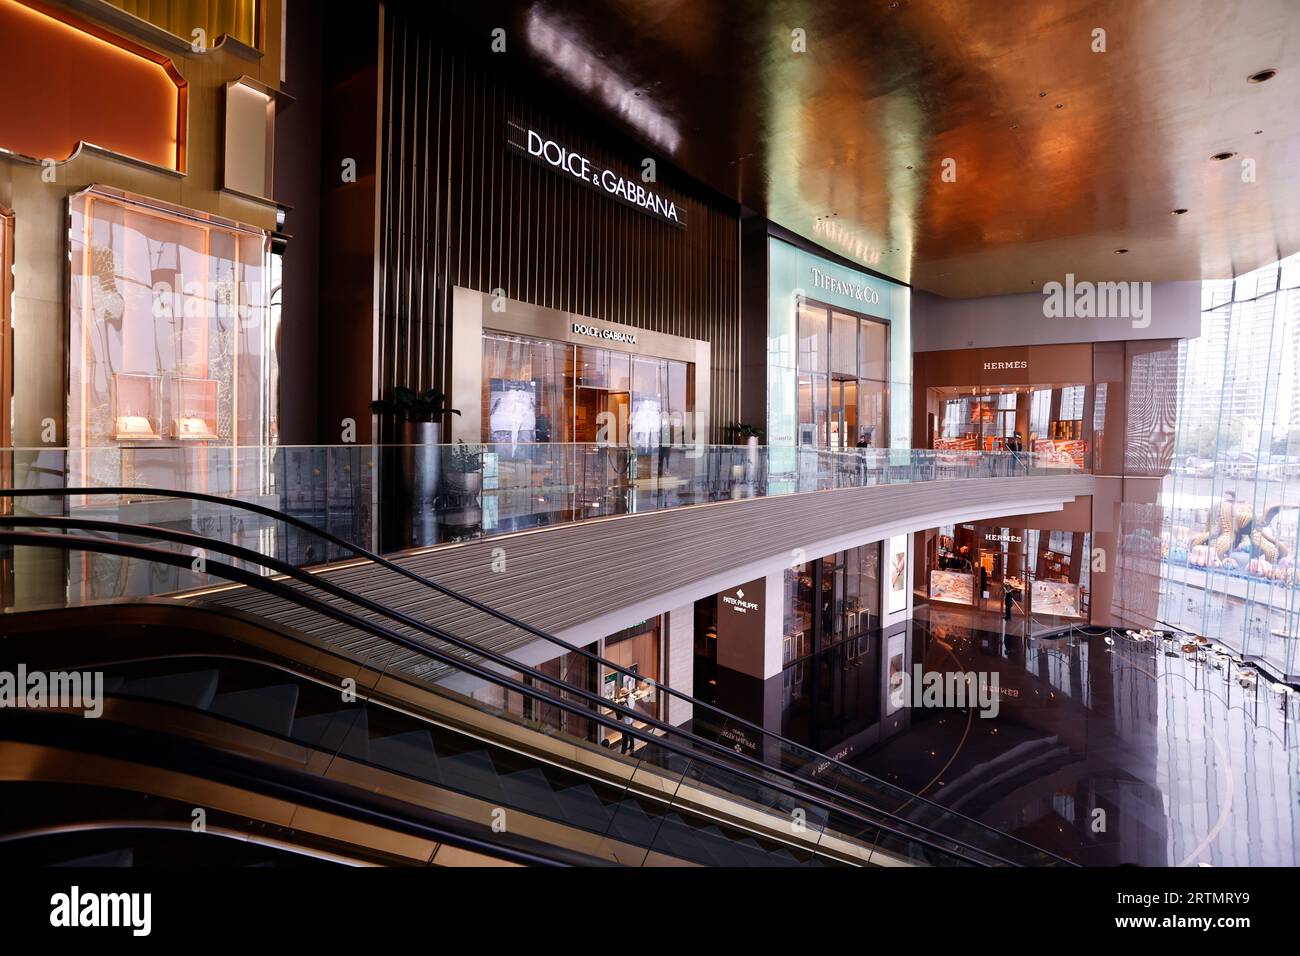 Einkaufszentrum Iconsiam. Luxuriöses Innendesign mit goldenem Design. Dolce Gabana. Bangkok. Thailand. Stockfoto